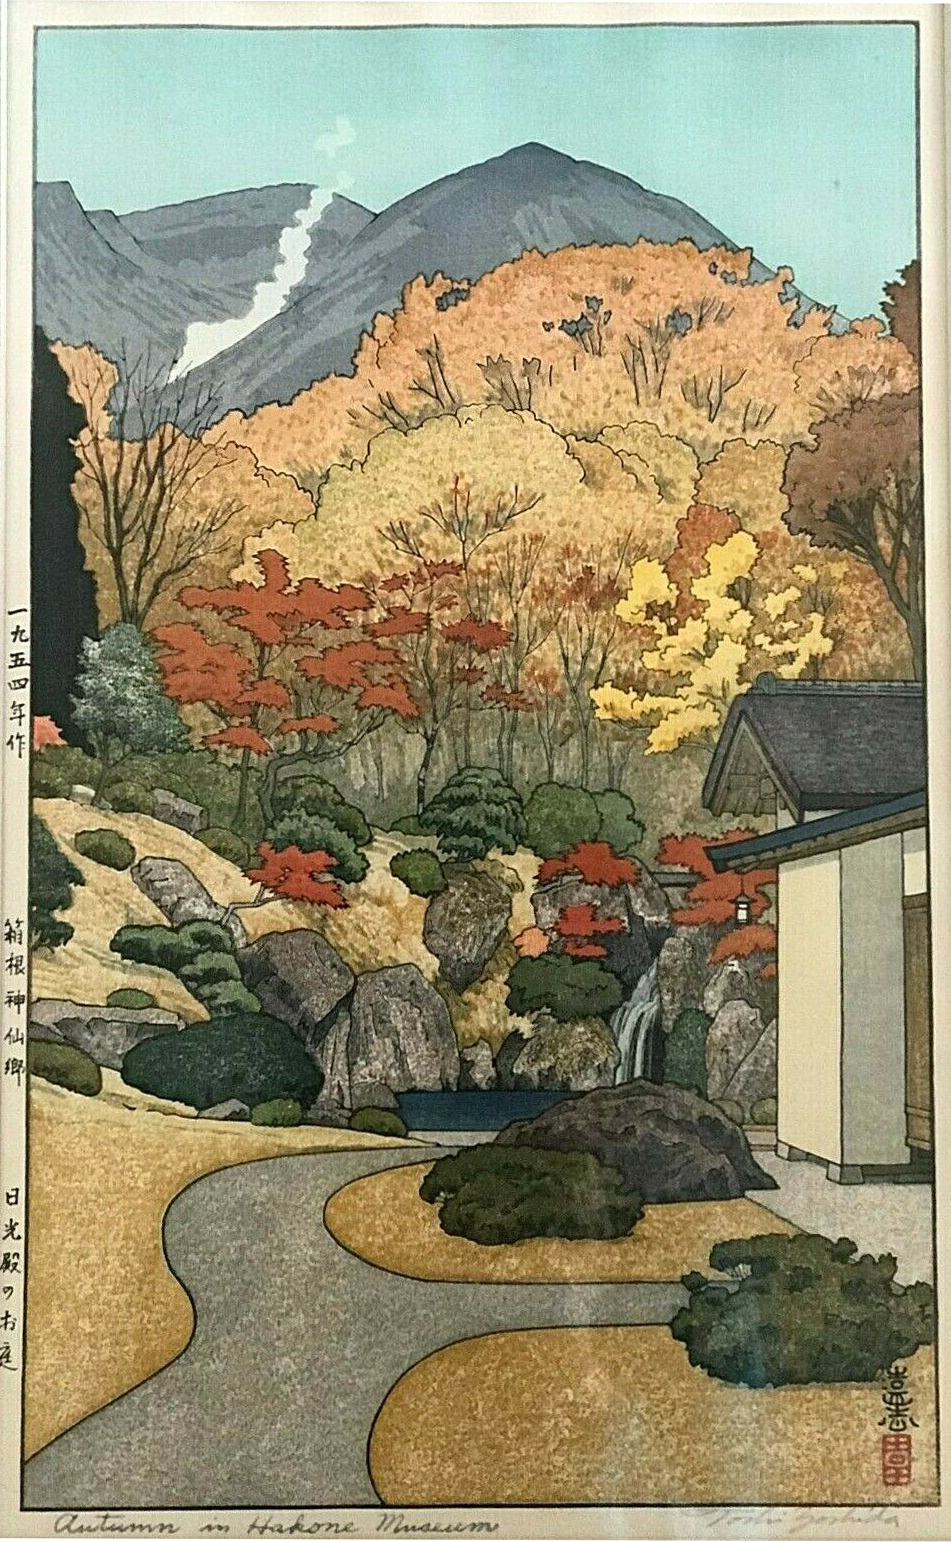 Autumn in Hakone Museum by Toshi Yoshida